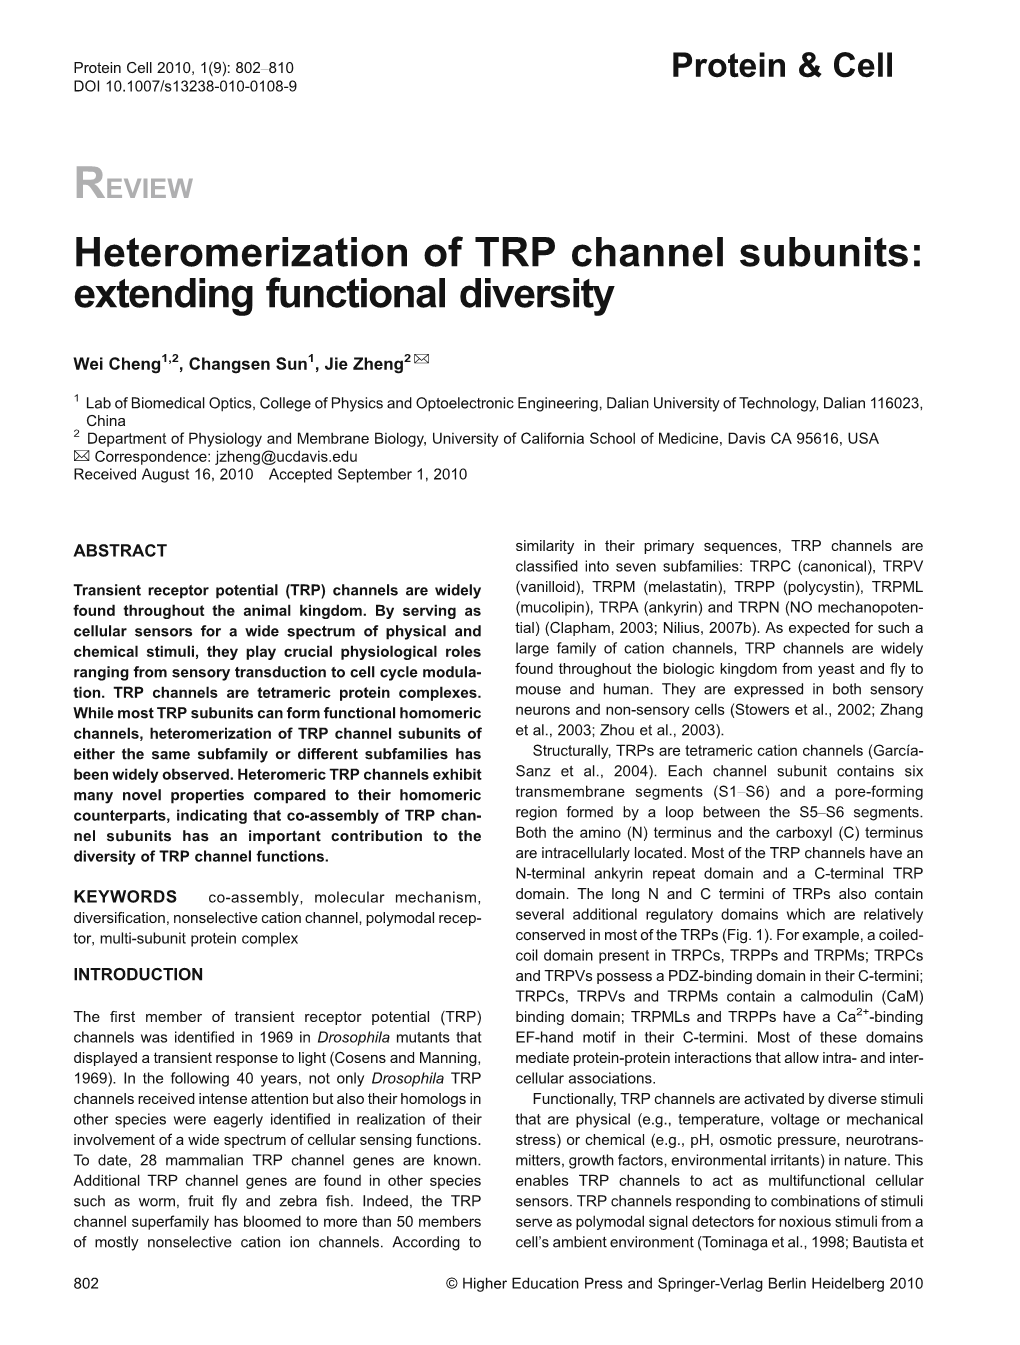 Heteromerization of TRP Channel Subunits: Extending Functional Diversity